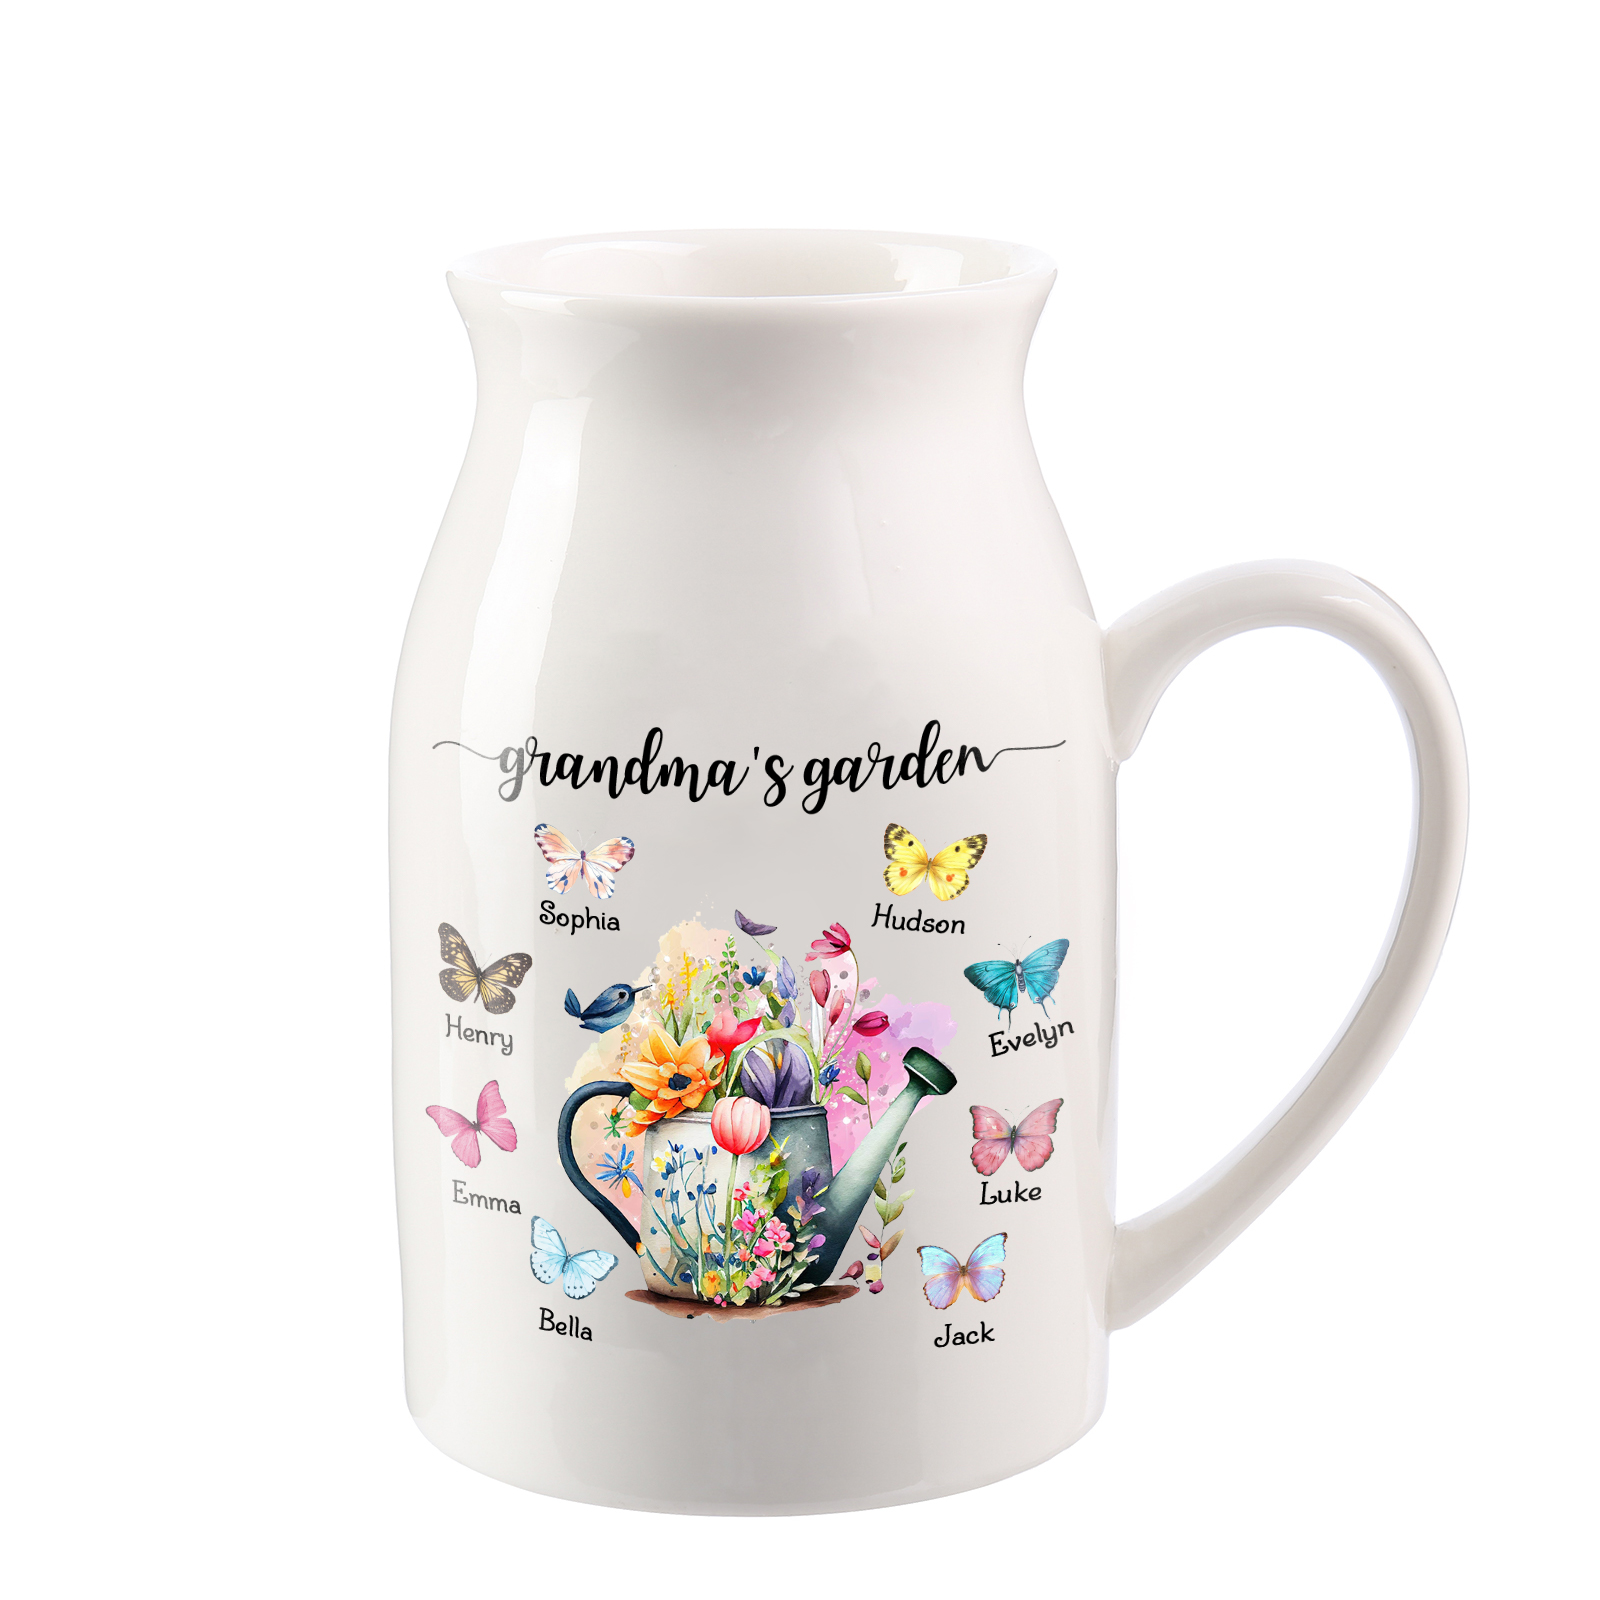 8 Names - Personalized Name "Grandma's Garden" Ceramic Vase as a Gift